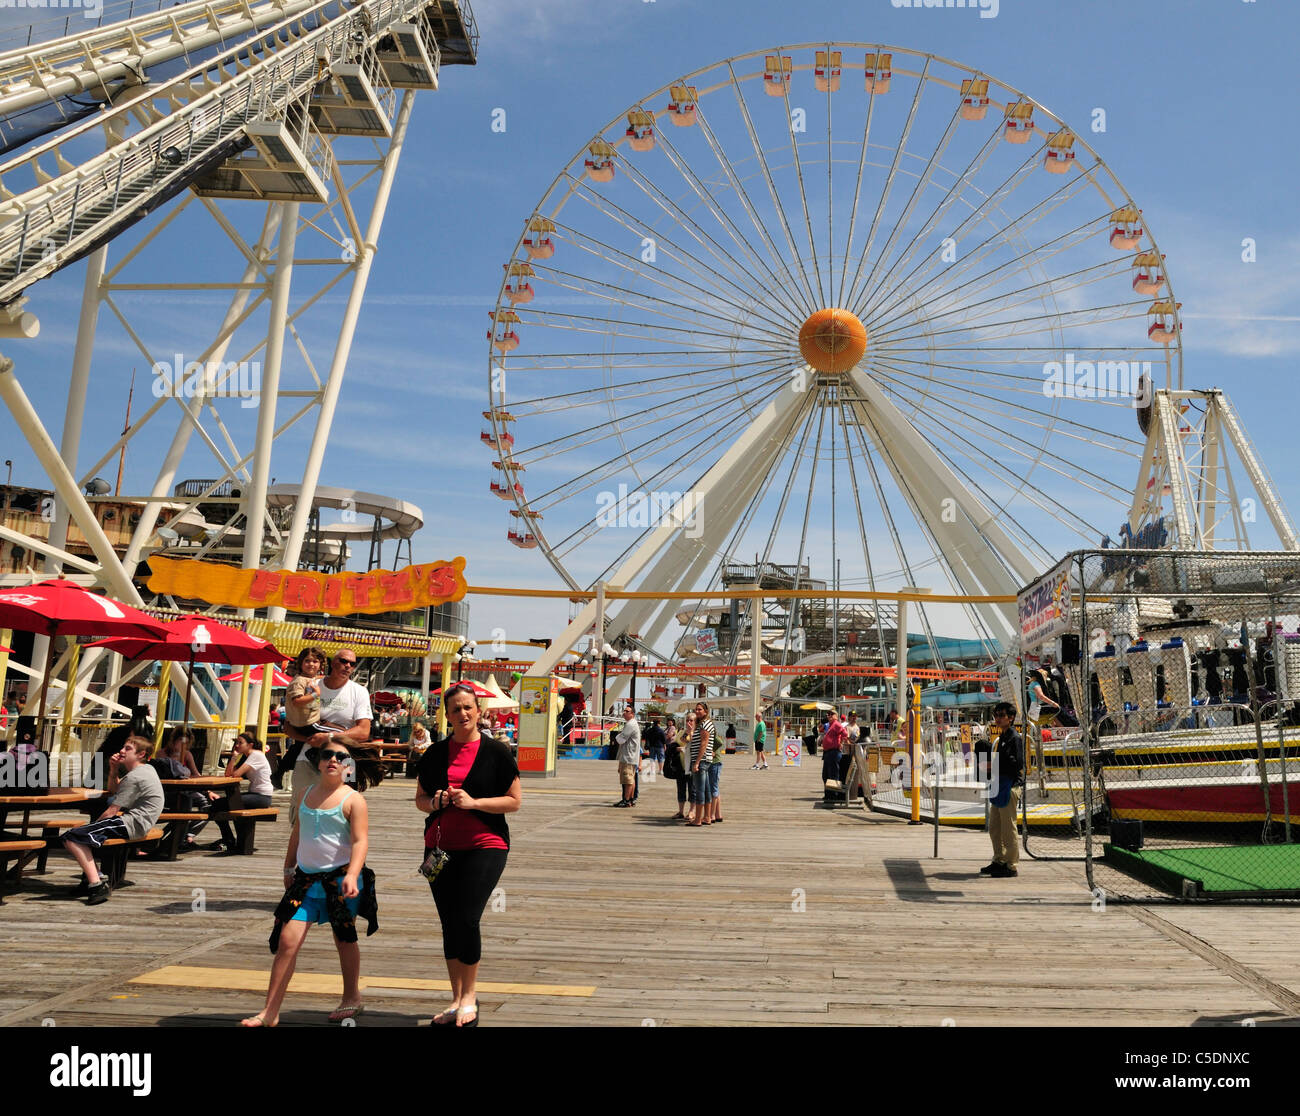 Grande ruota panoramica Ferris in Morey's Piers, Wildwood, New Jersey Foto Stock